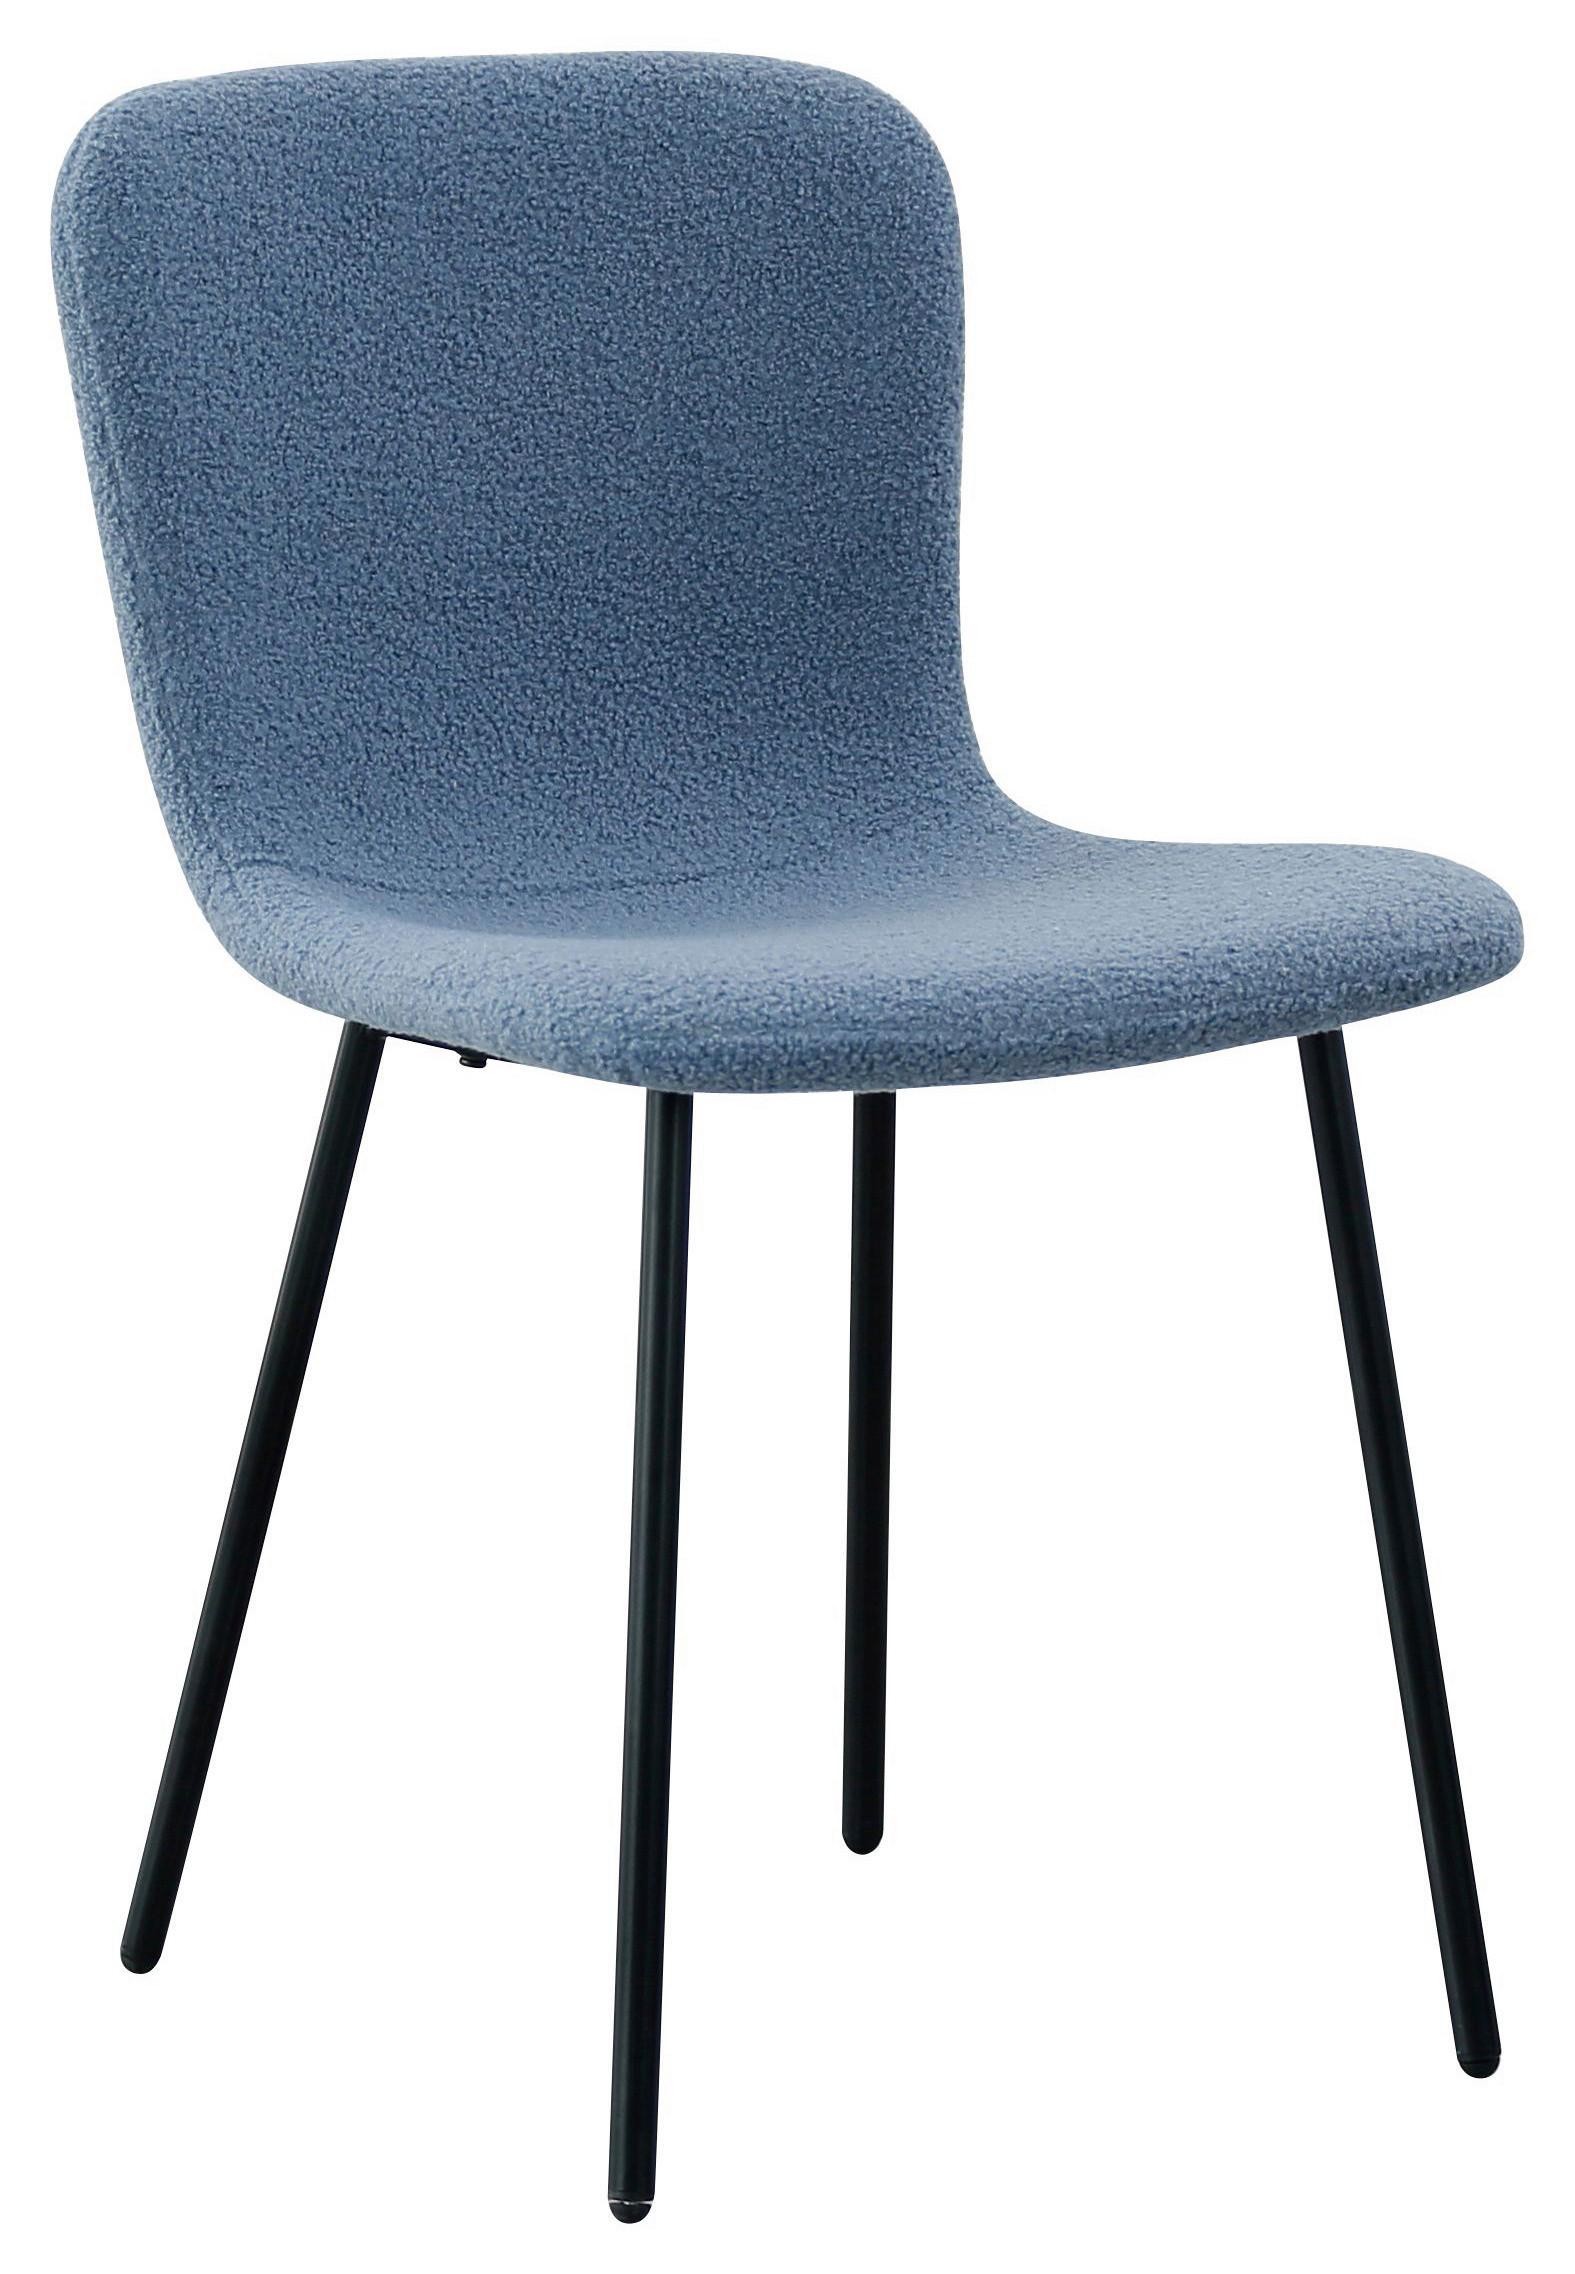 Stuhl Teddy in Blau/Schwarz - Blau/Schwarz, Design, Textil/Metall (44/79/51cm) - Modern Living